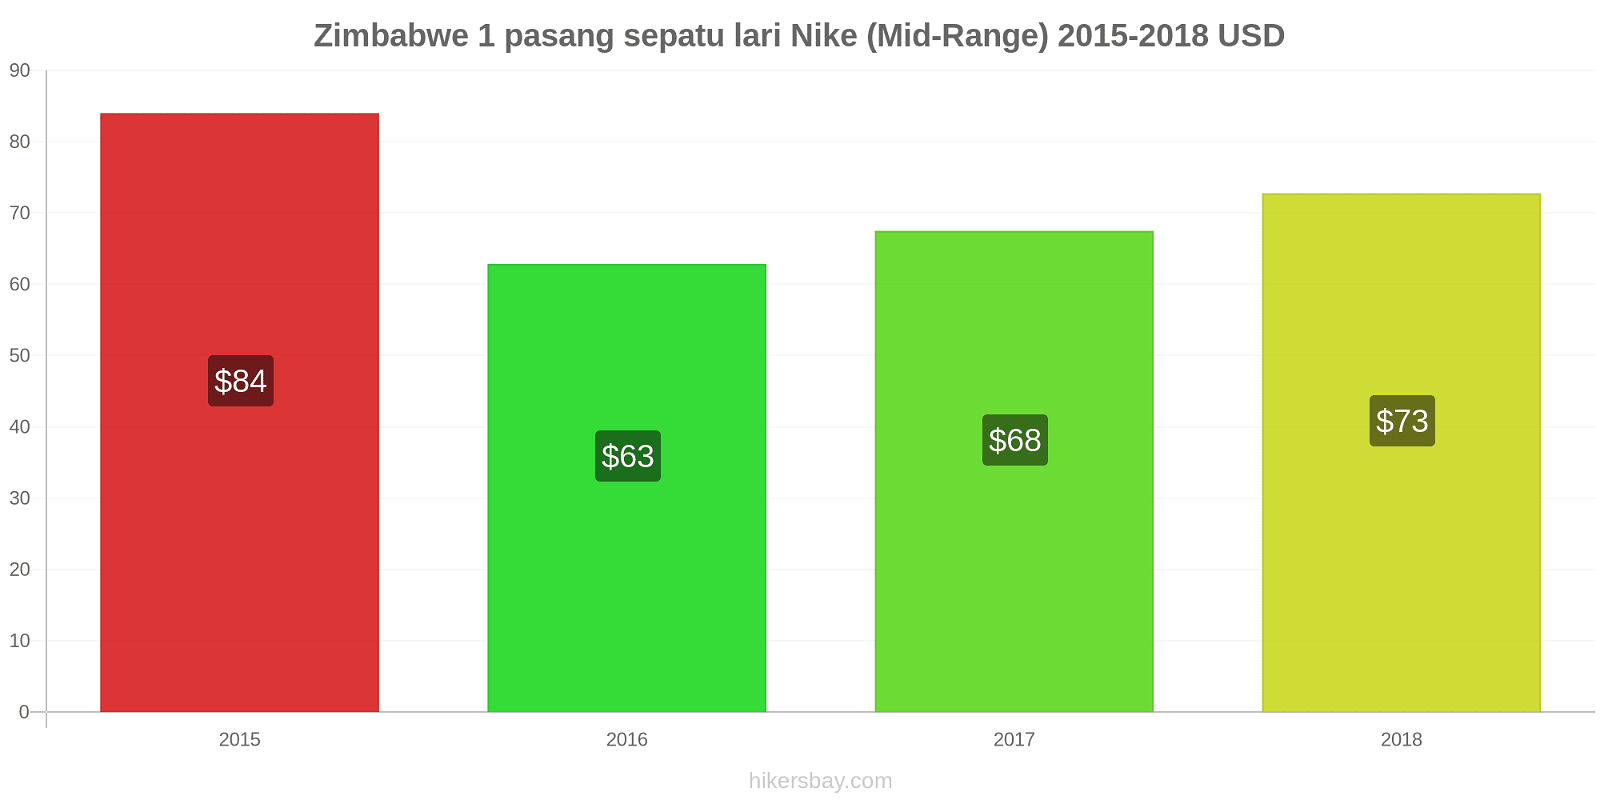 Zimbabwe perubahan harga 1 pasang sepatu lari Nike (Mid-Range) hikersbay.com